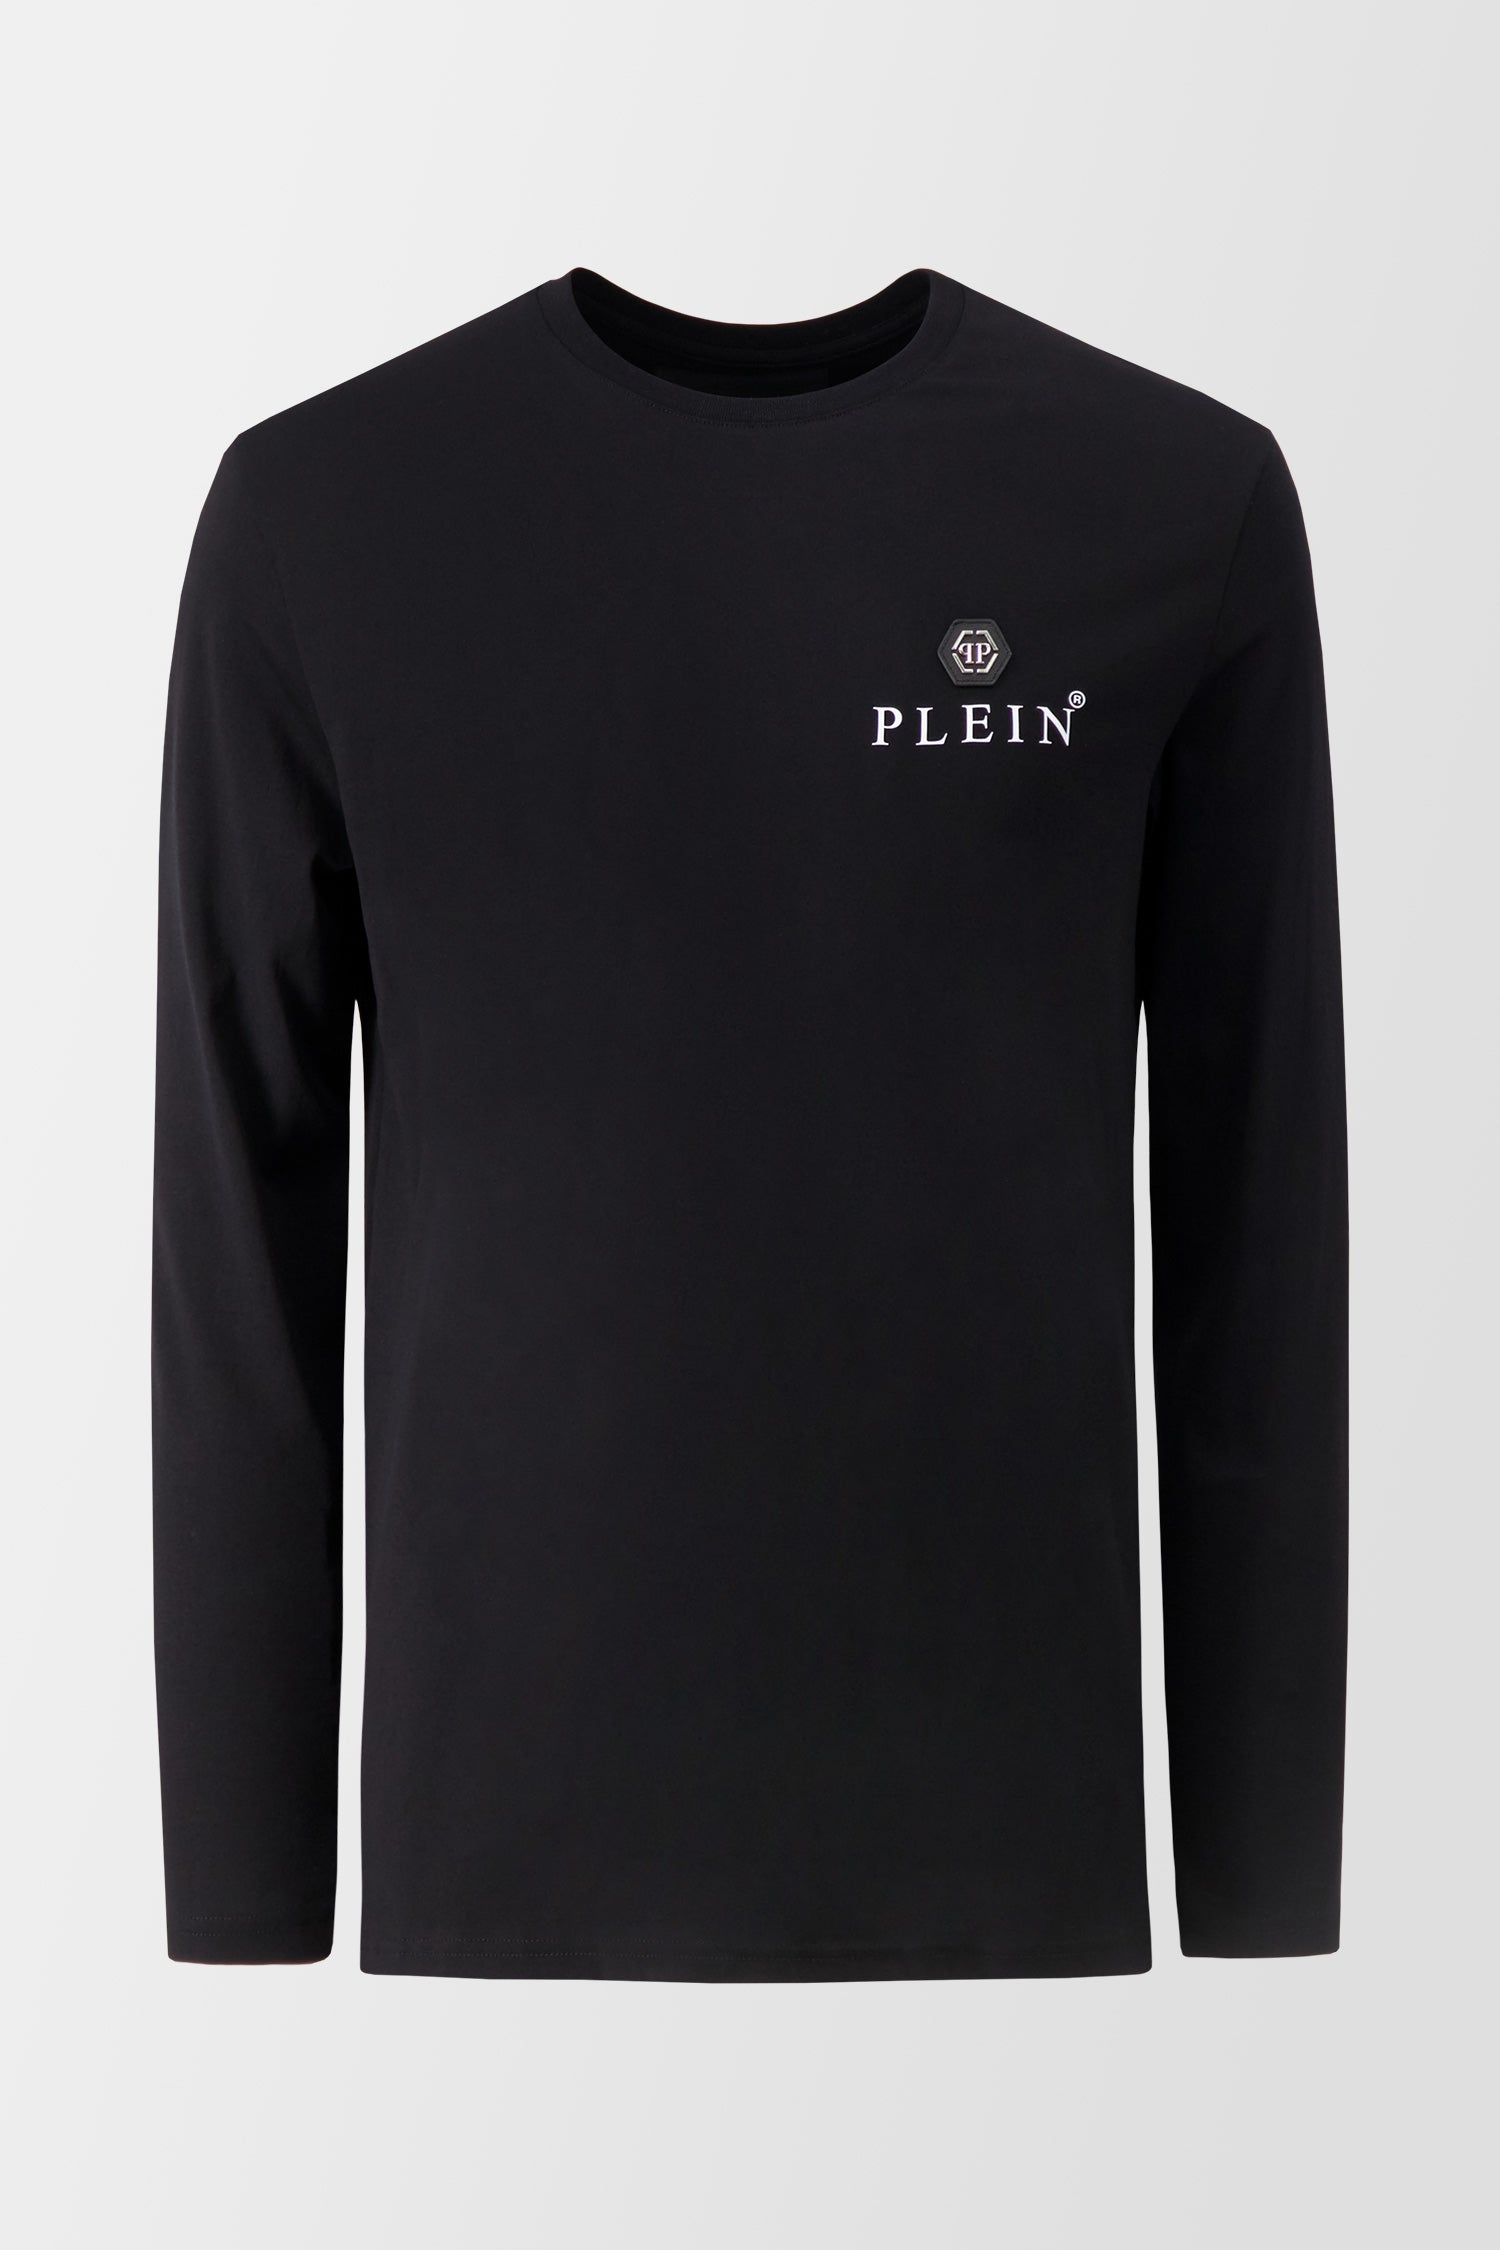 Philipp Plein Black Long Sleeve Iconic Plein T-Shirt